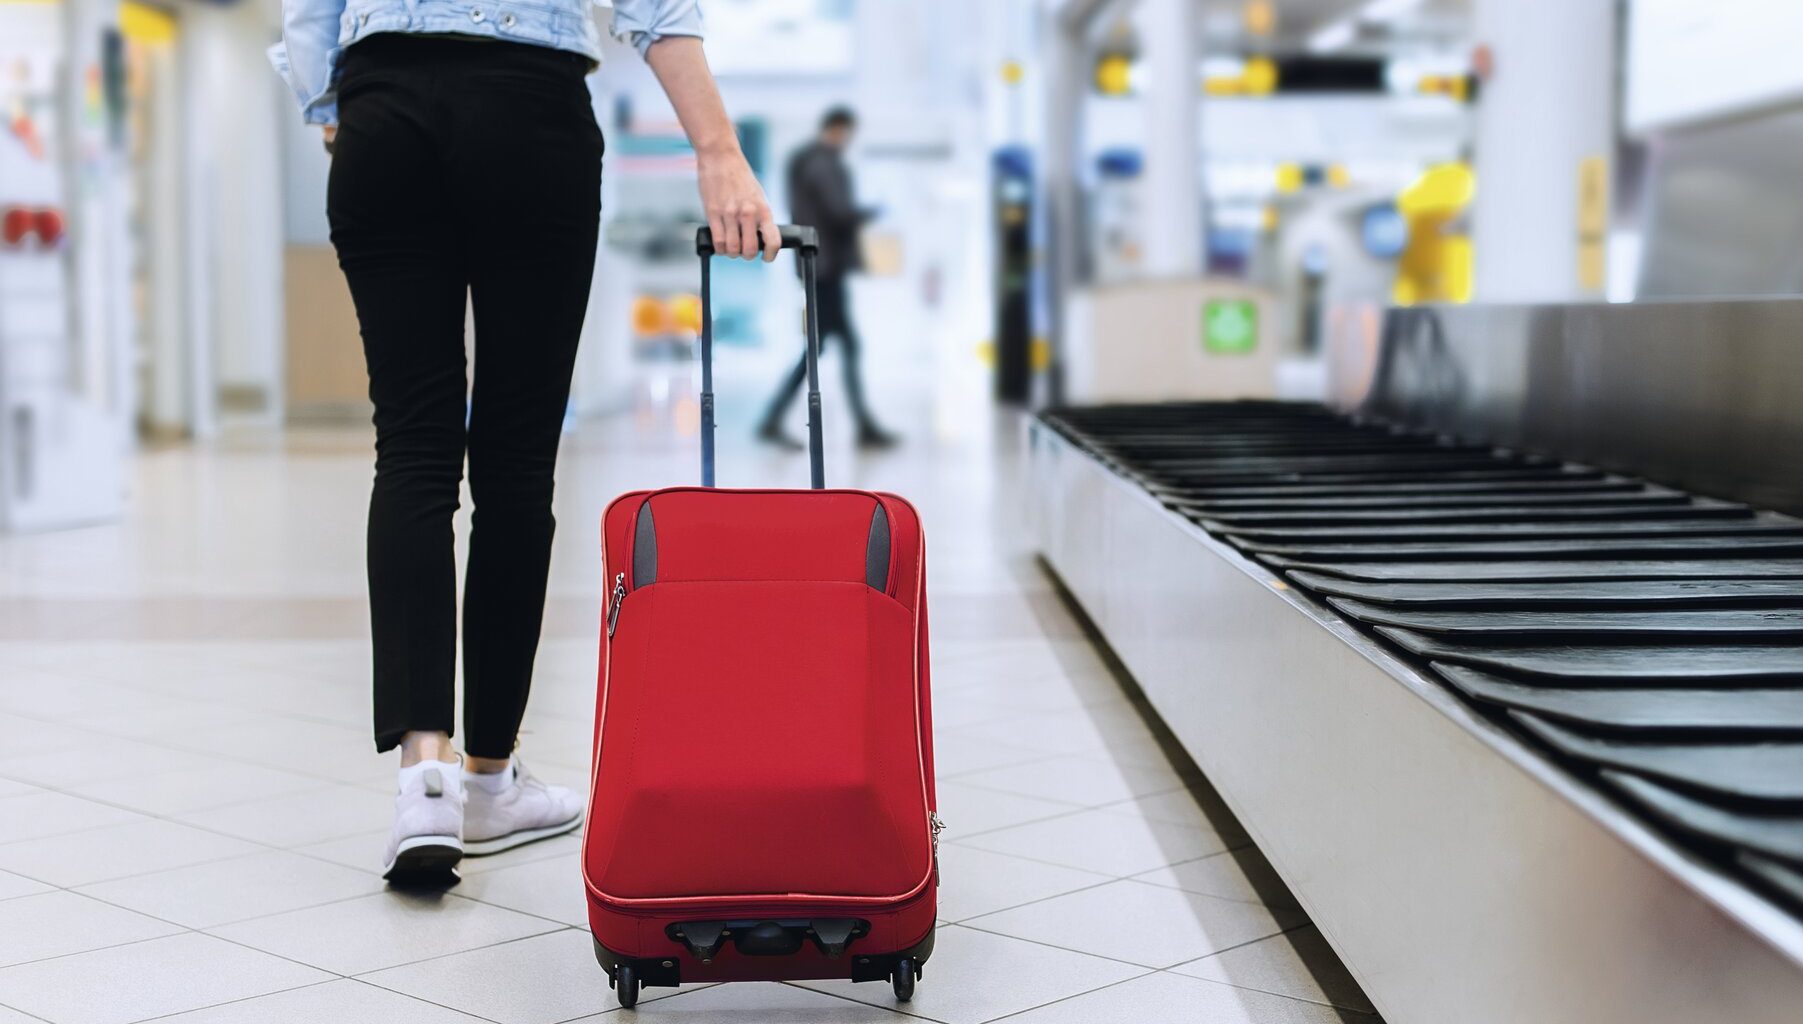 automatic tag reading, Automatic Tag Reading for Airport Baggage Handling